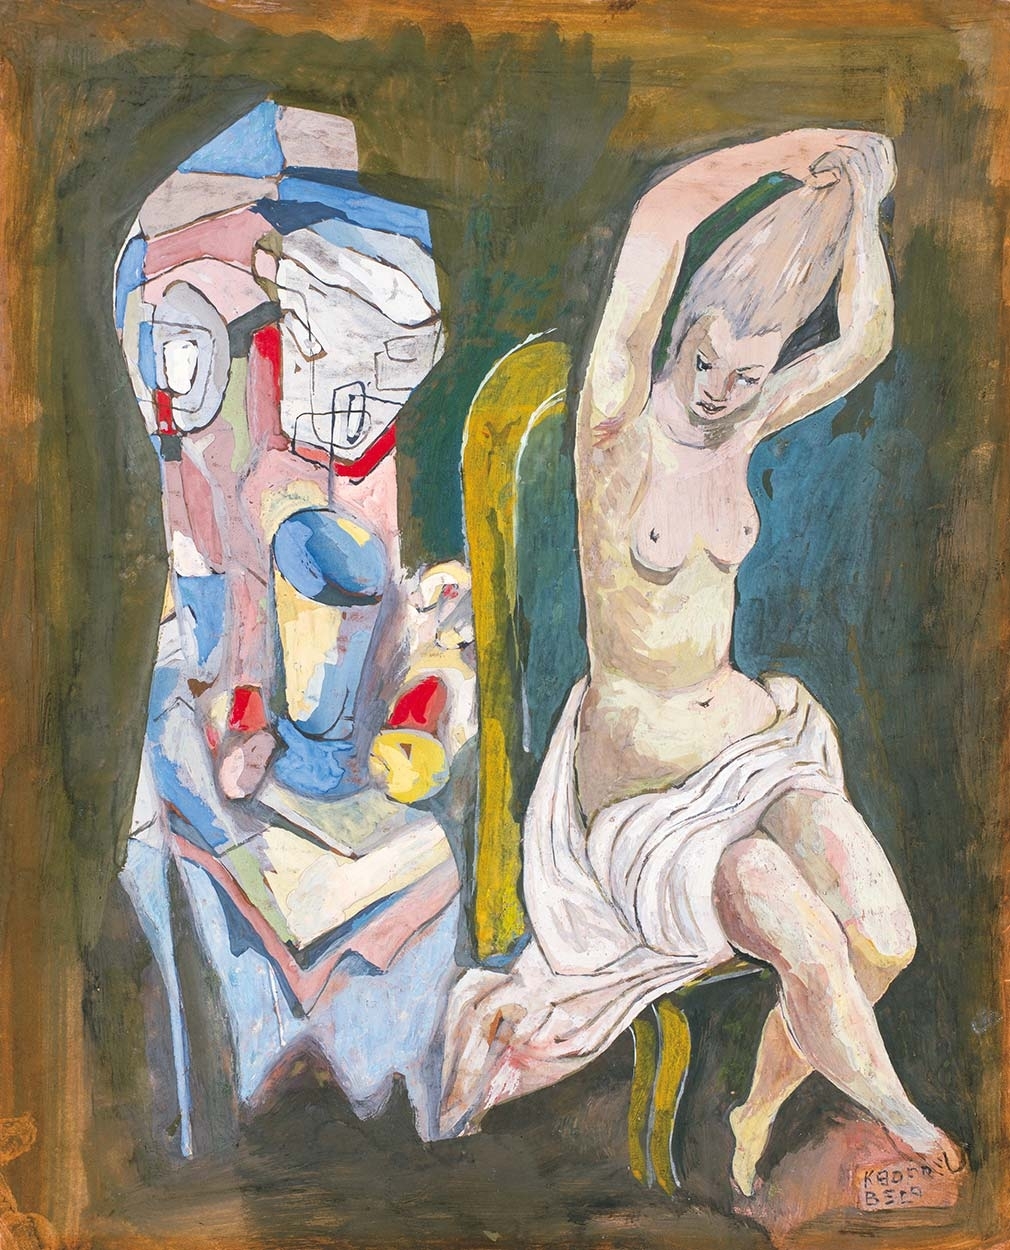 Kádár Béla (1877-1956) With a combing, abstract scene